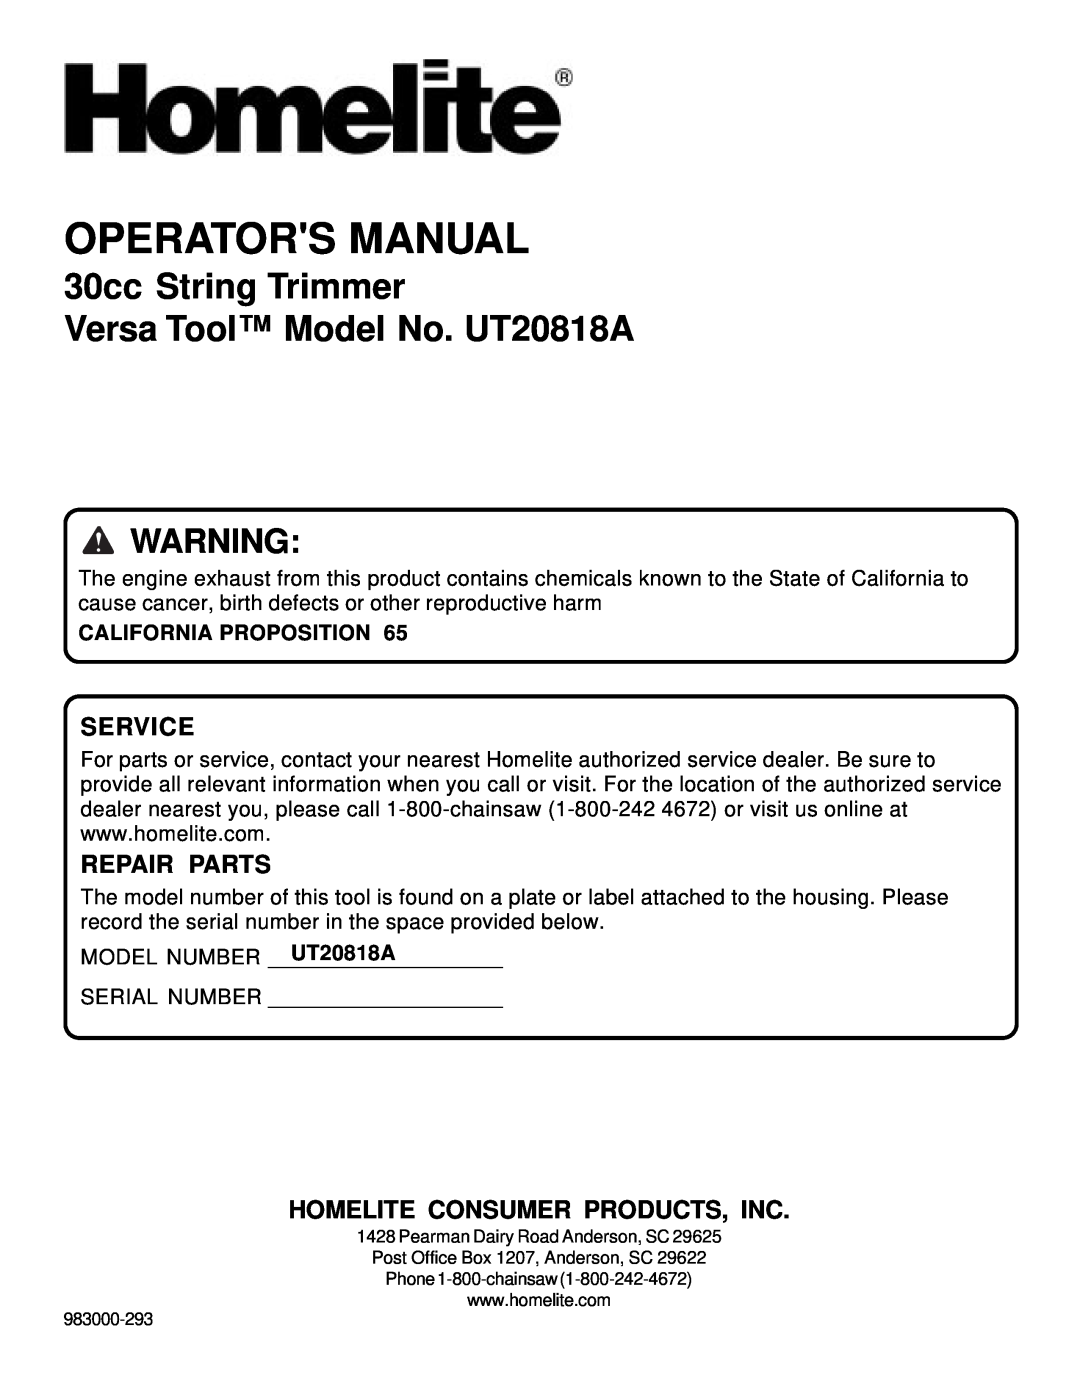 Homelite UT20818A manual Service, Repair Parts, Homelite Consumer Products, Inc, California Proposition, Operators Manual 